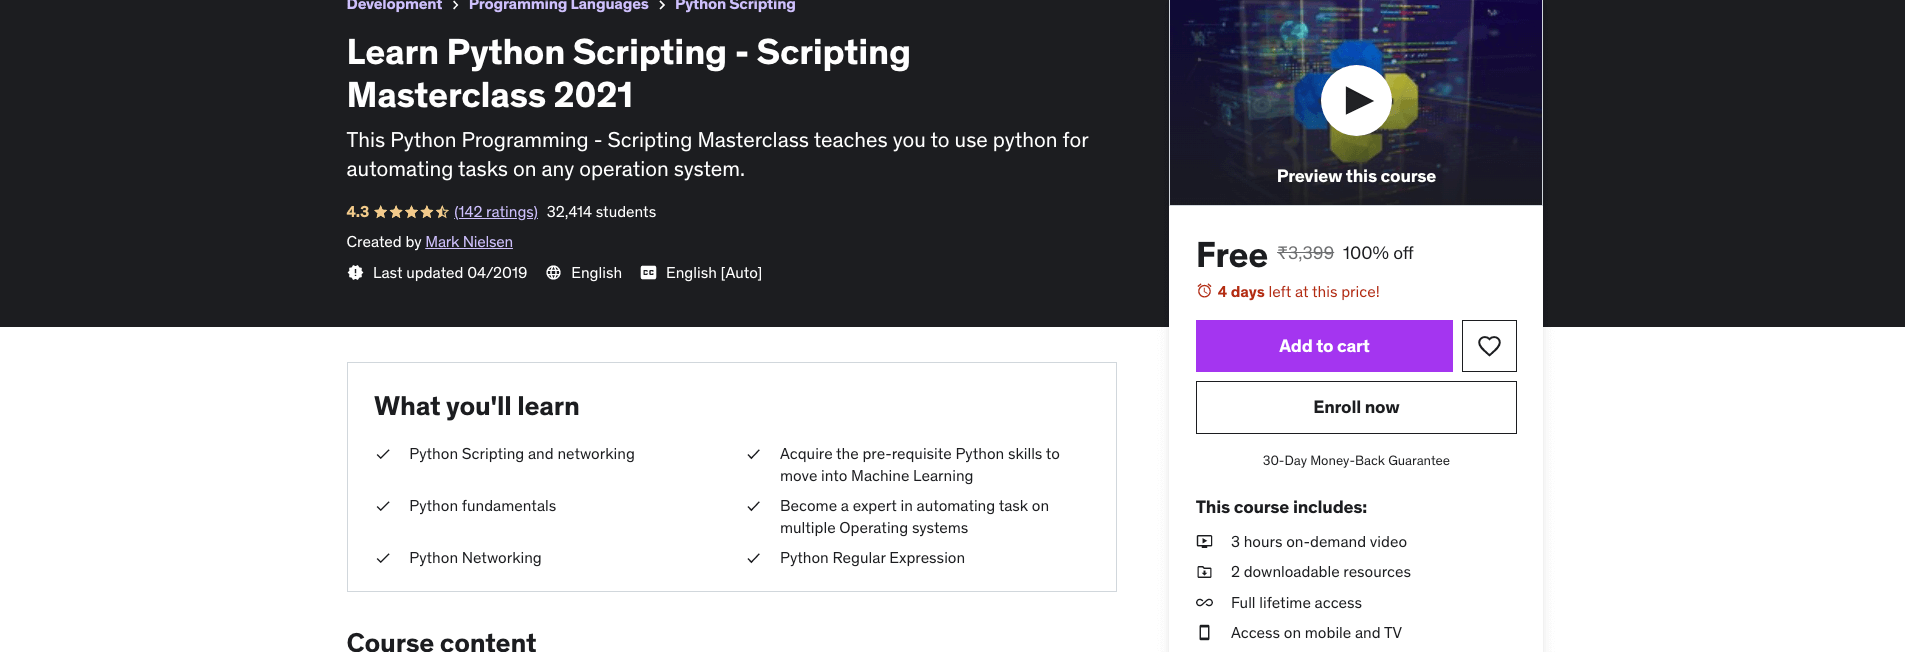 Learn Python Scripting - Scripting Masterclass 2021